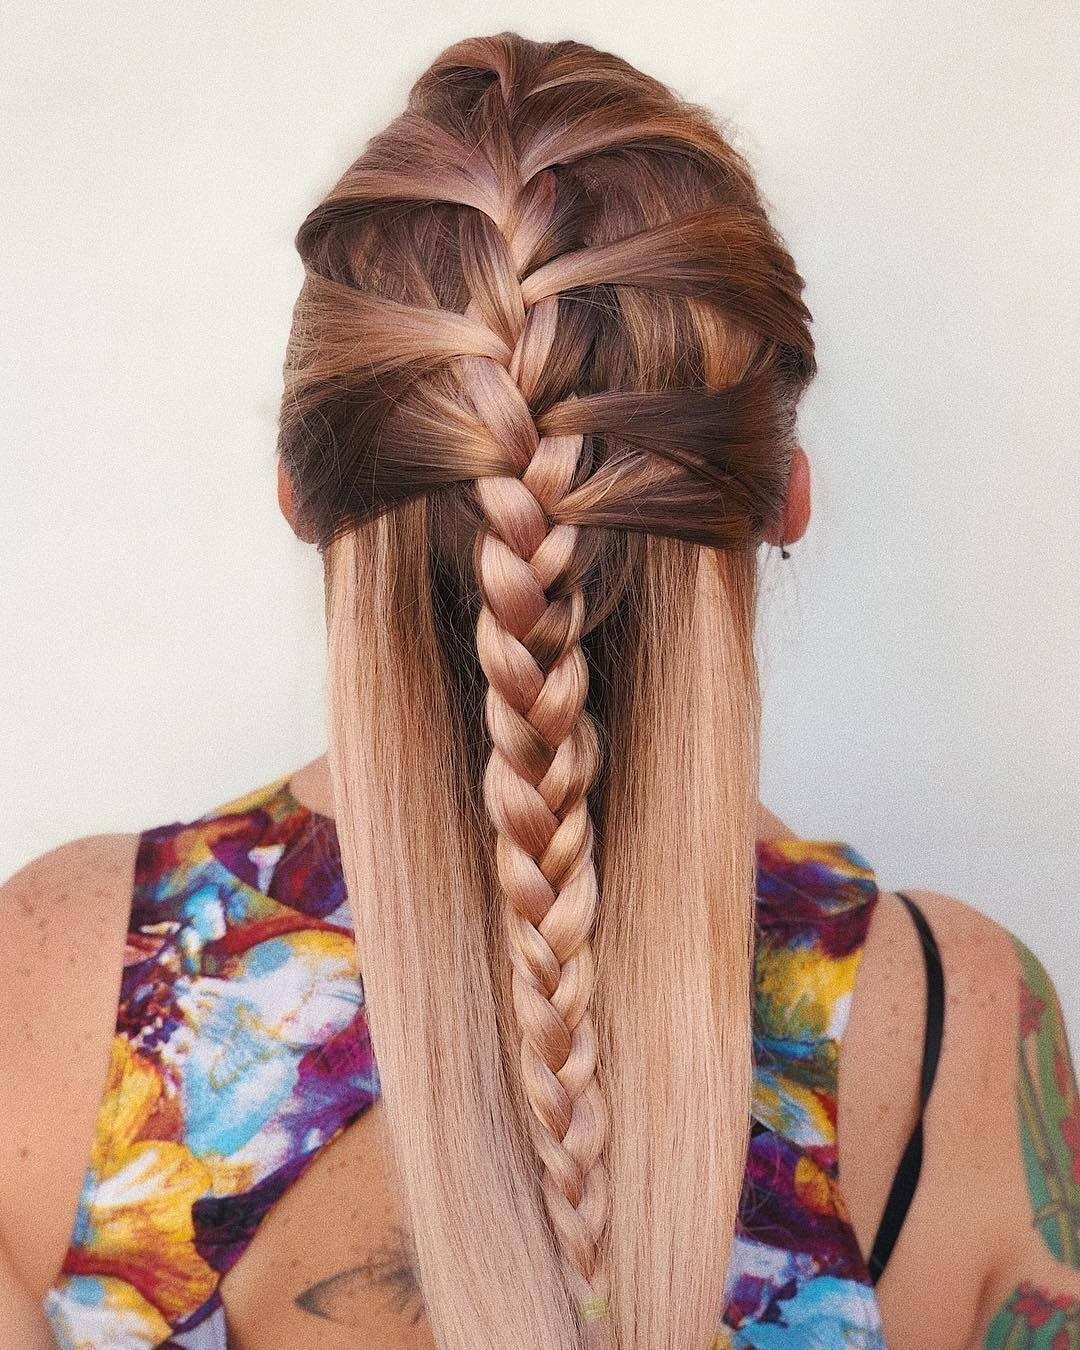 Schwarzkopf Professional - Rosy shades and cute braids 😍

*Formula* 👉 @nekonekostyle used #IGORAVIBRANCE 9.5-18 over pre-lightened hair level 10 💕

#MOREVIBRANCE #hairstyle #pinkhair #hairgoals #hairi...